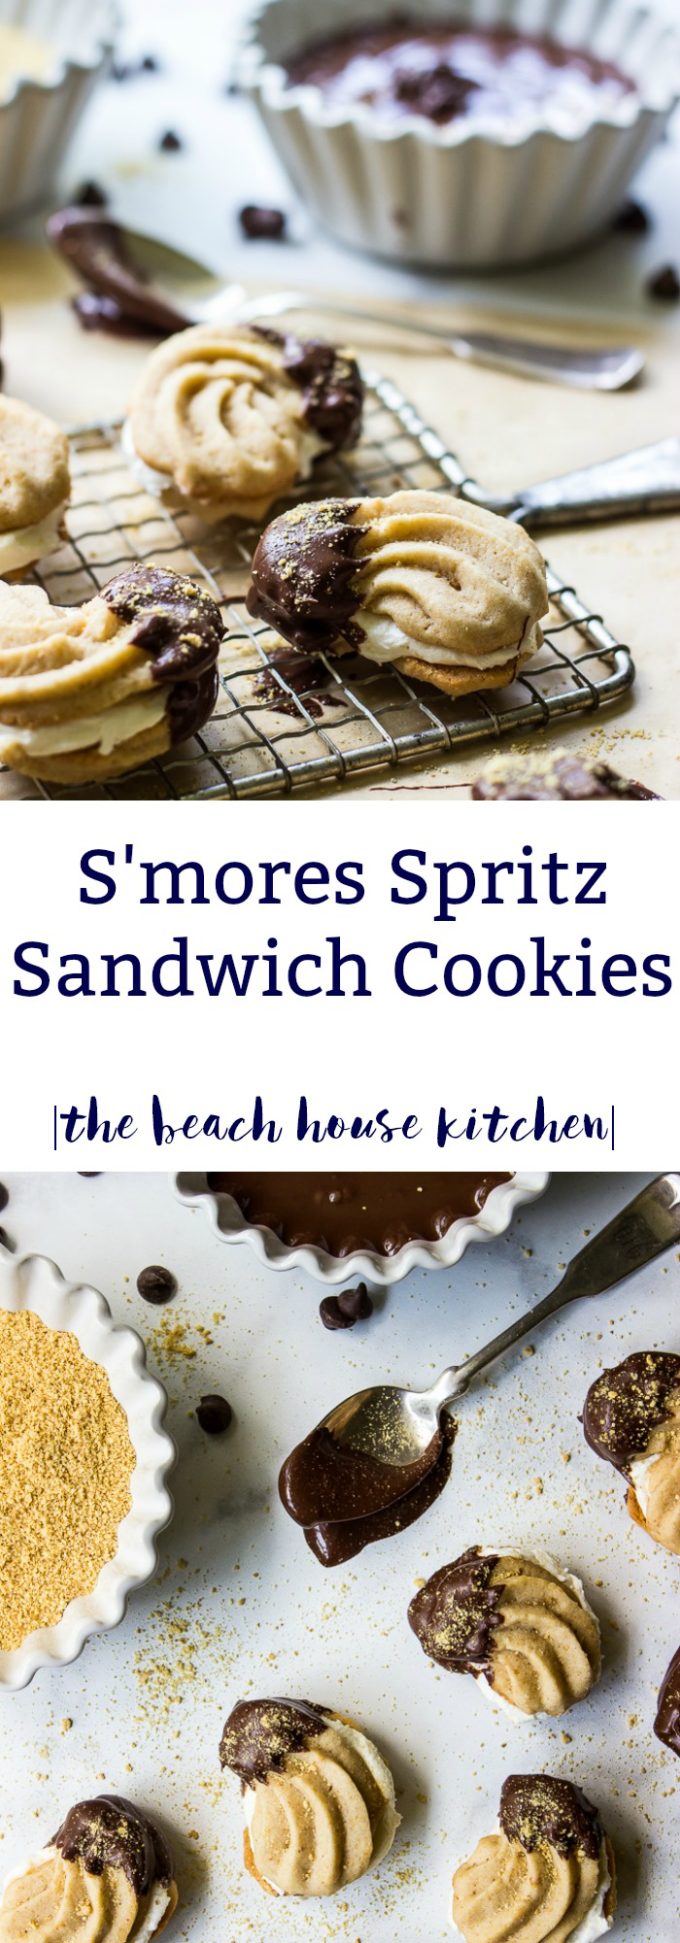 S'mores Spritz Sandwich Cookies - The Beach House Kitchen